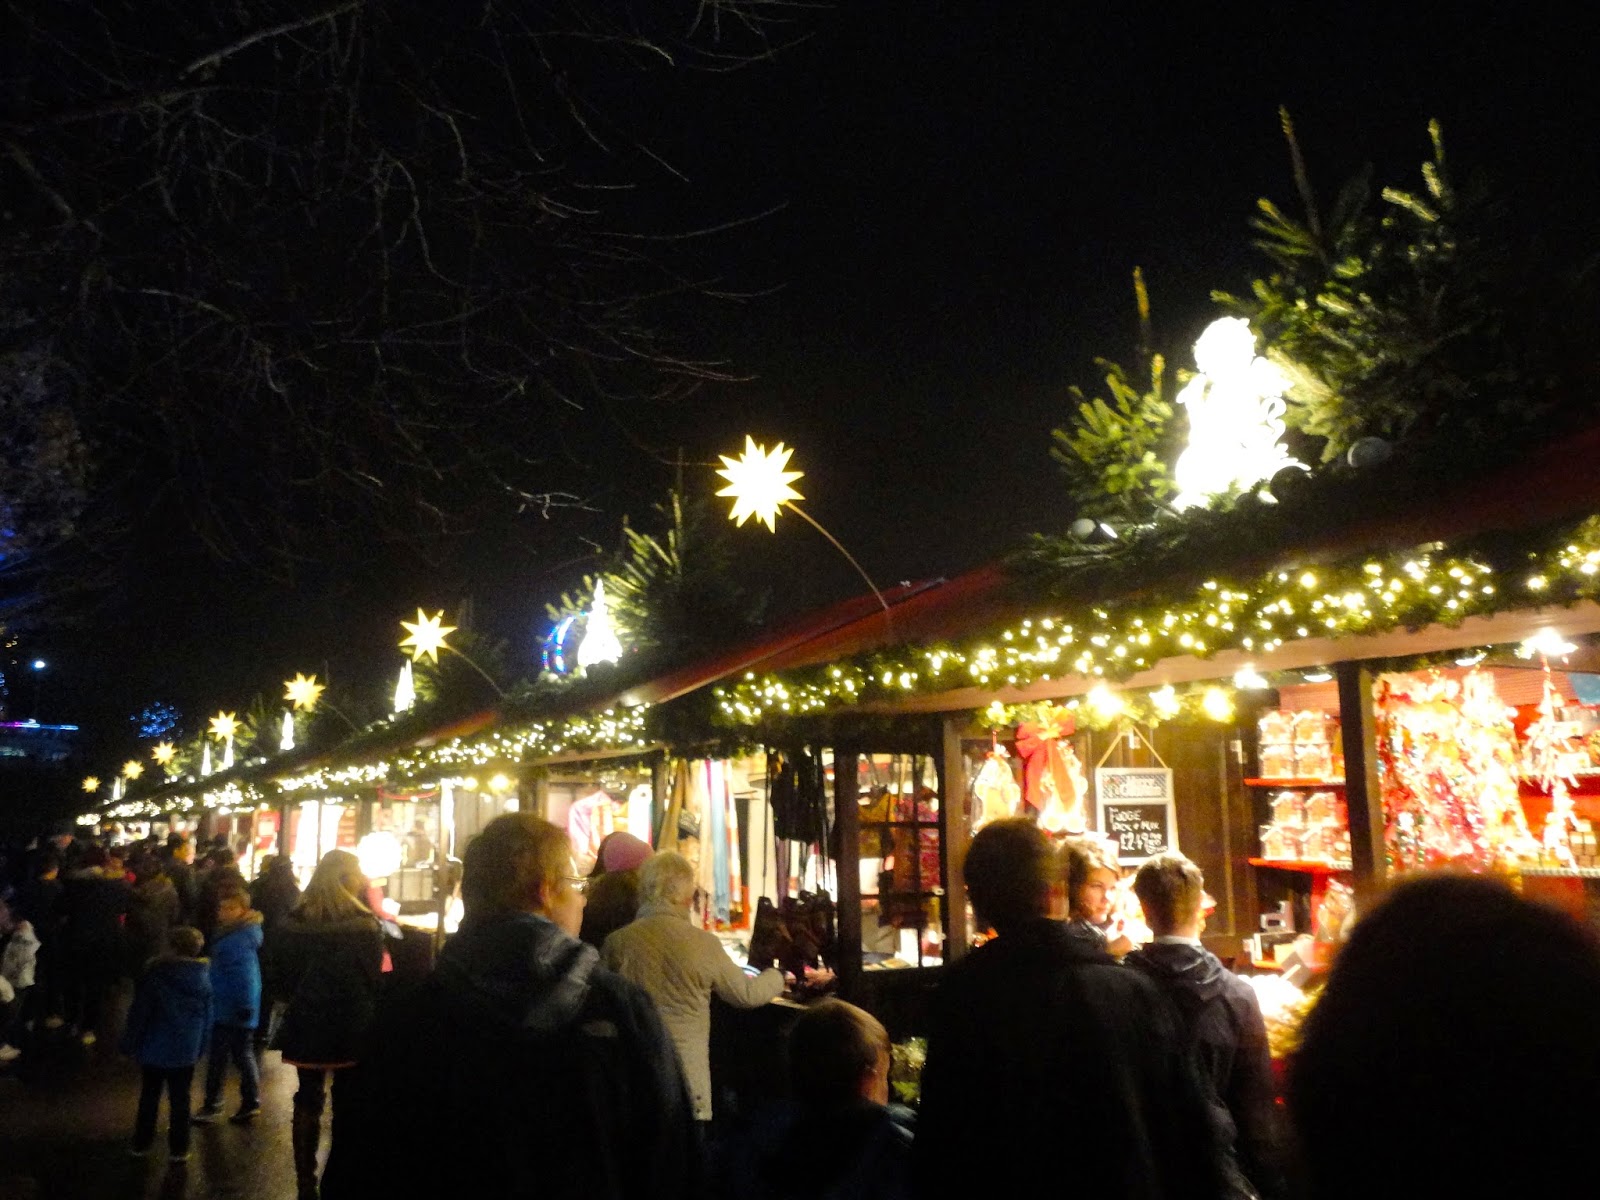 German market stalls in Edinburgh's Winter Wonderland at Christmas in Princes Street Gardens